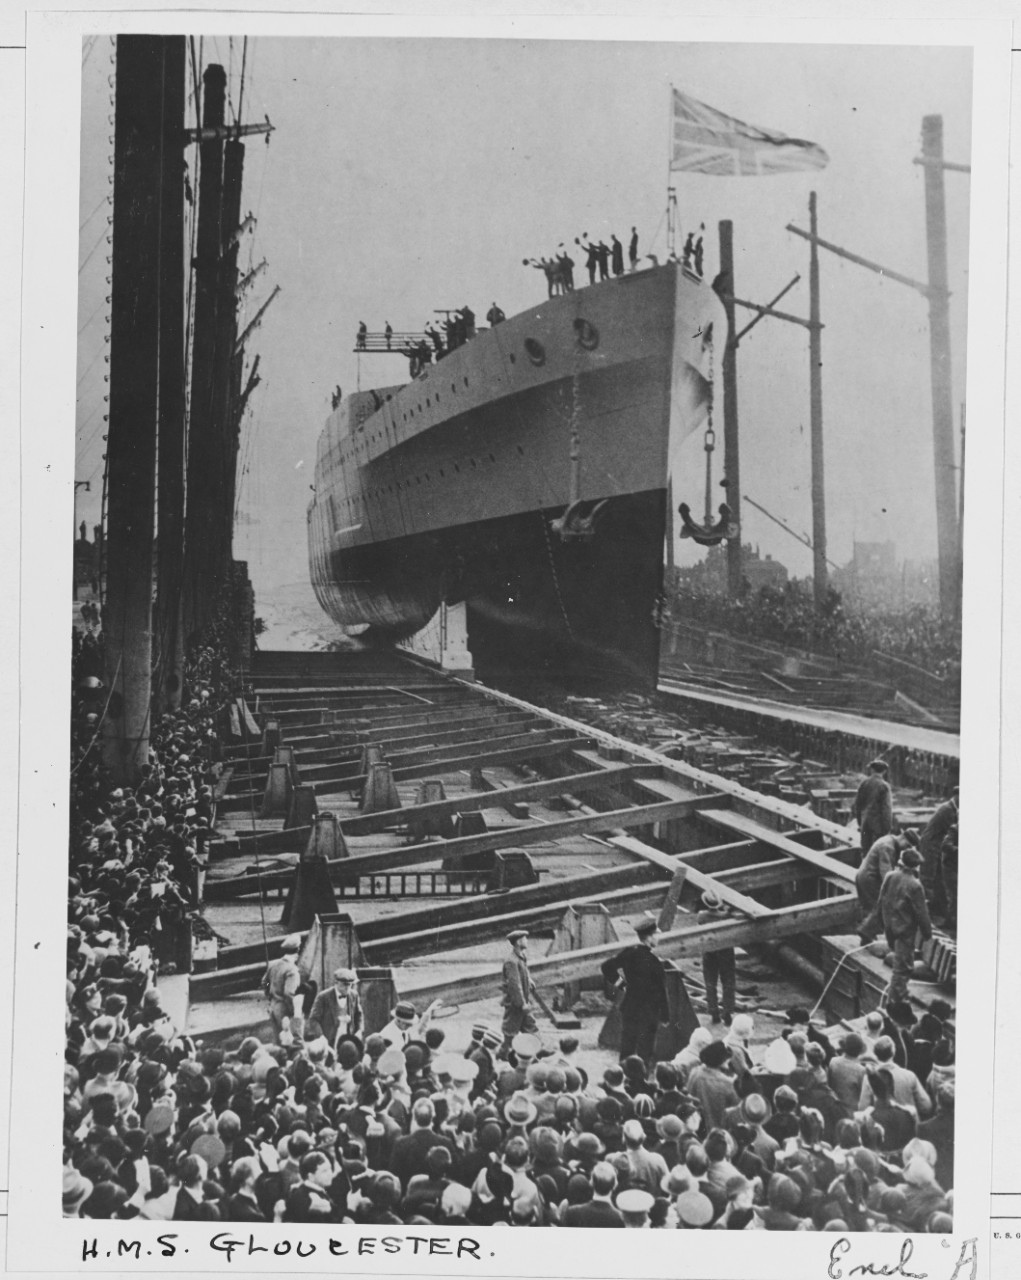 HMS GLOUCESTER (British Cruiser, 1937) Launching, October 1937.